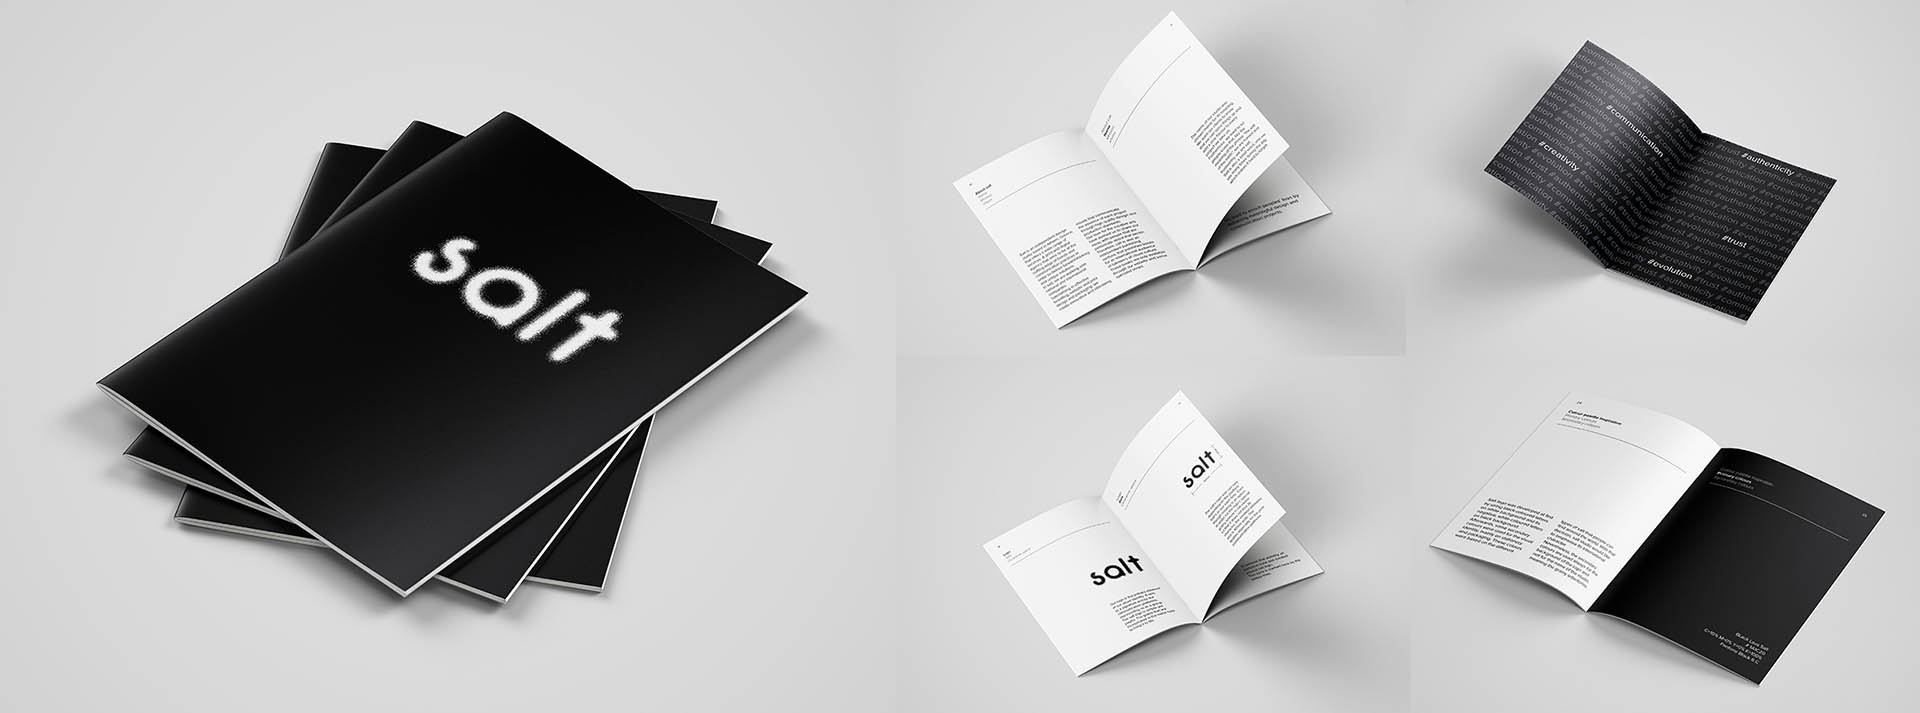 Brand guideline booklet for salt studio